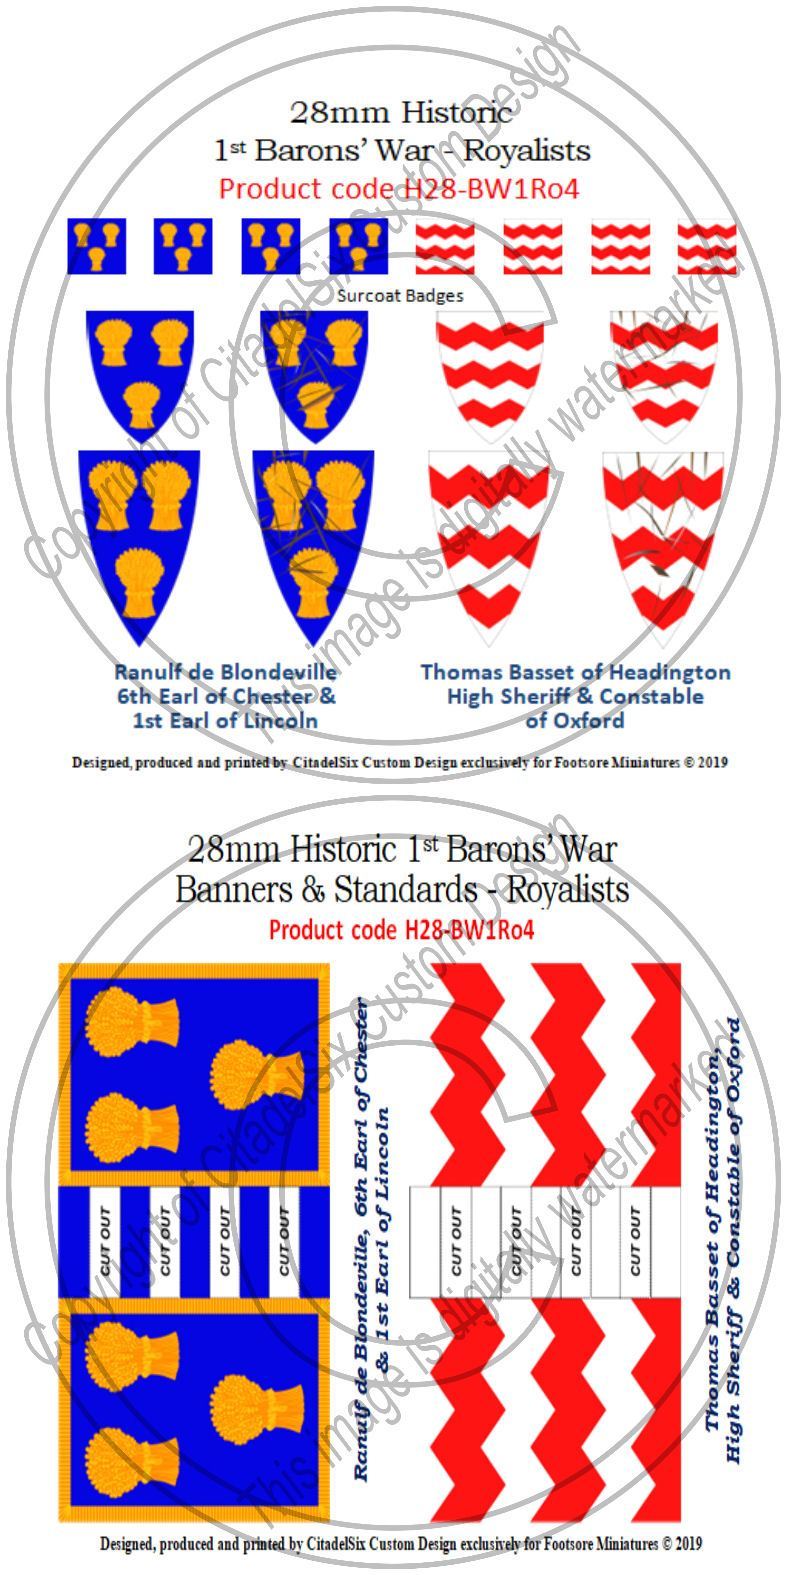 Ranulf de Blondeville & Thomas Basset of Headington, Banners & Decals